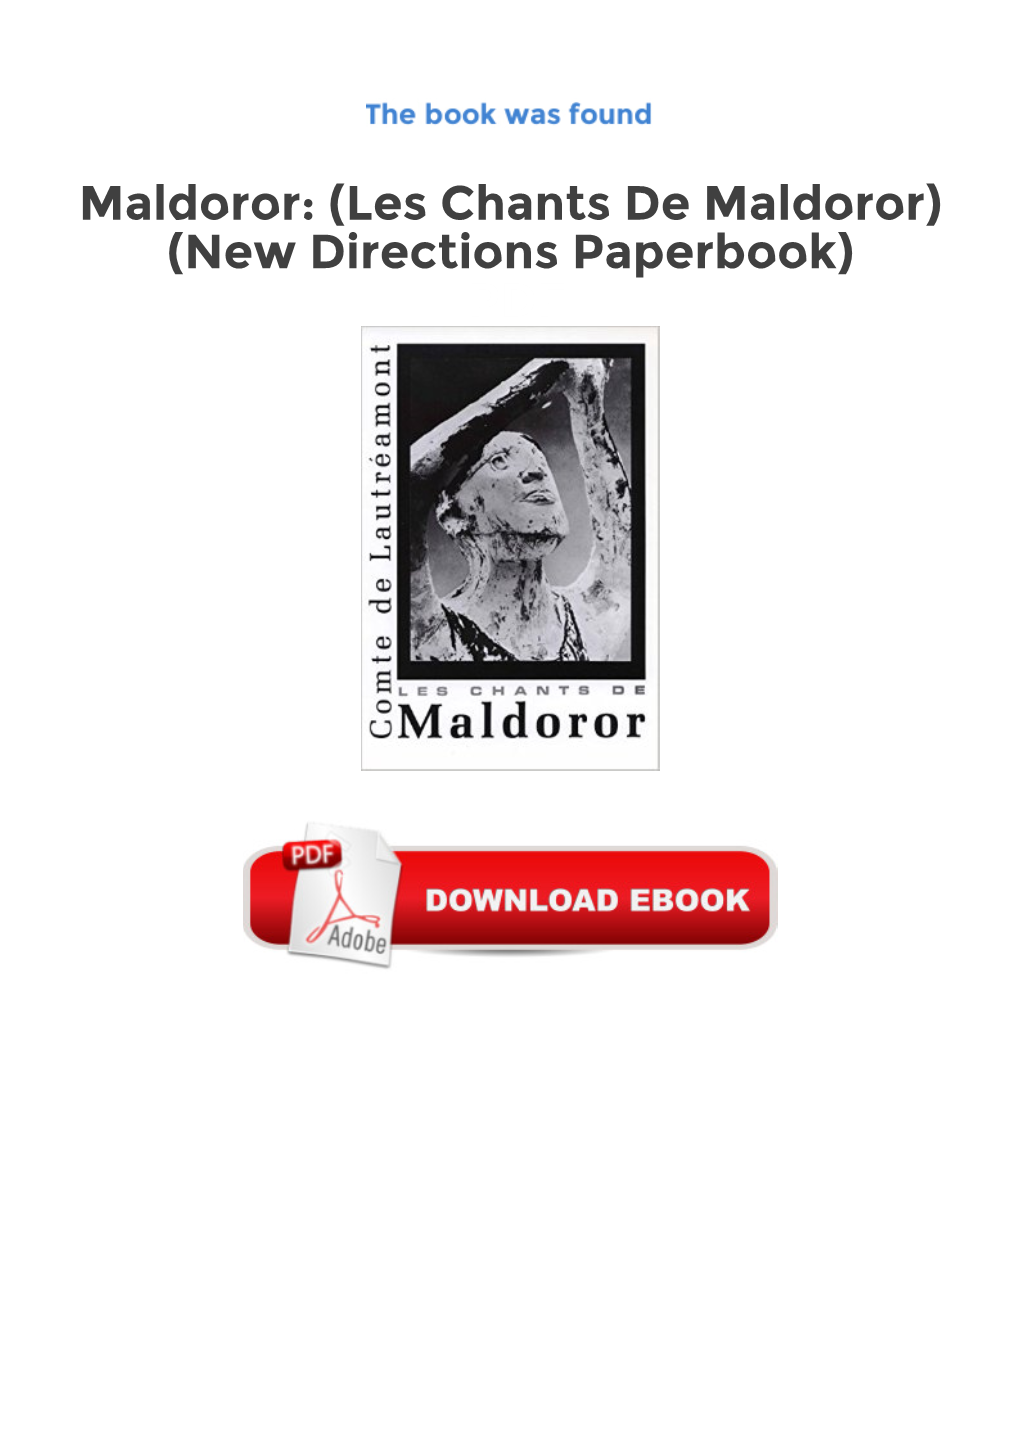 Les Chants De Maldoror) (New Directions Paperbook